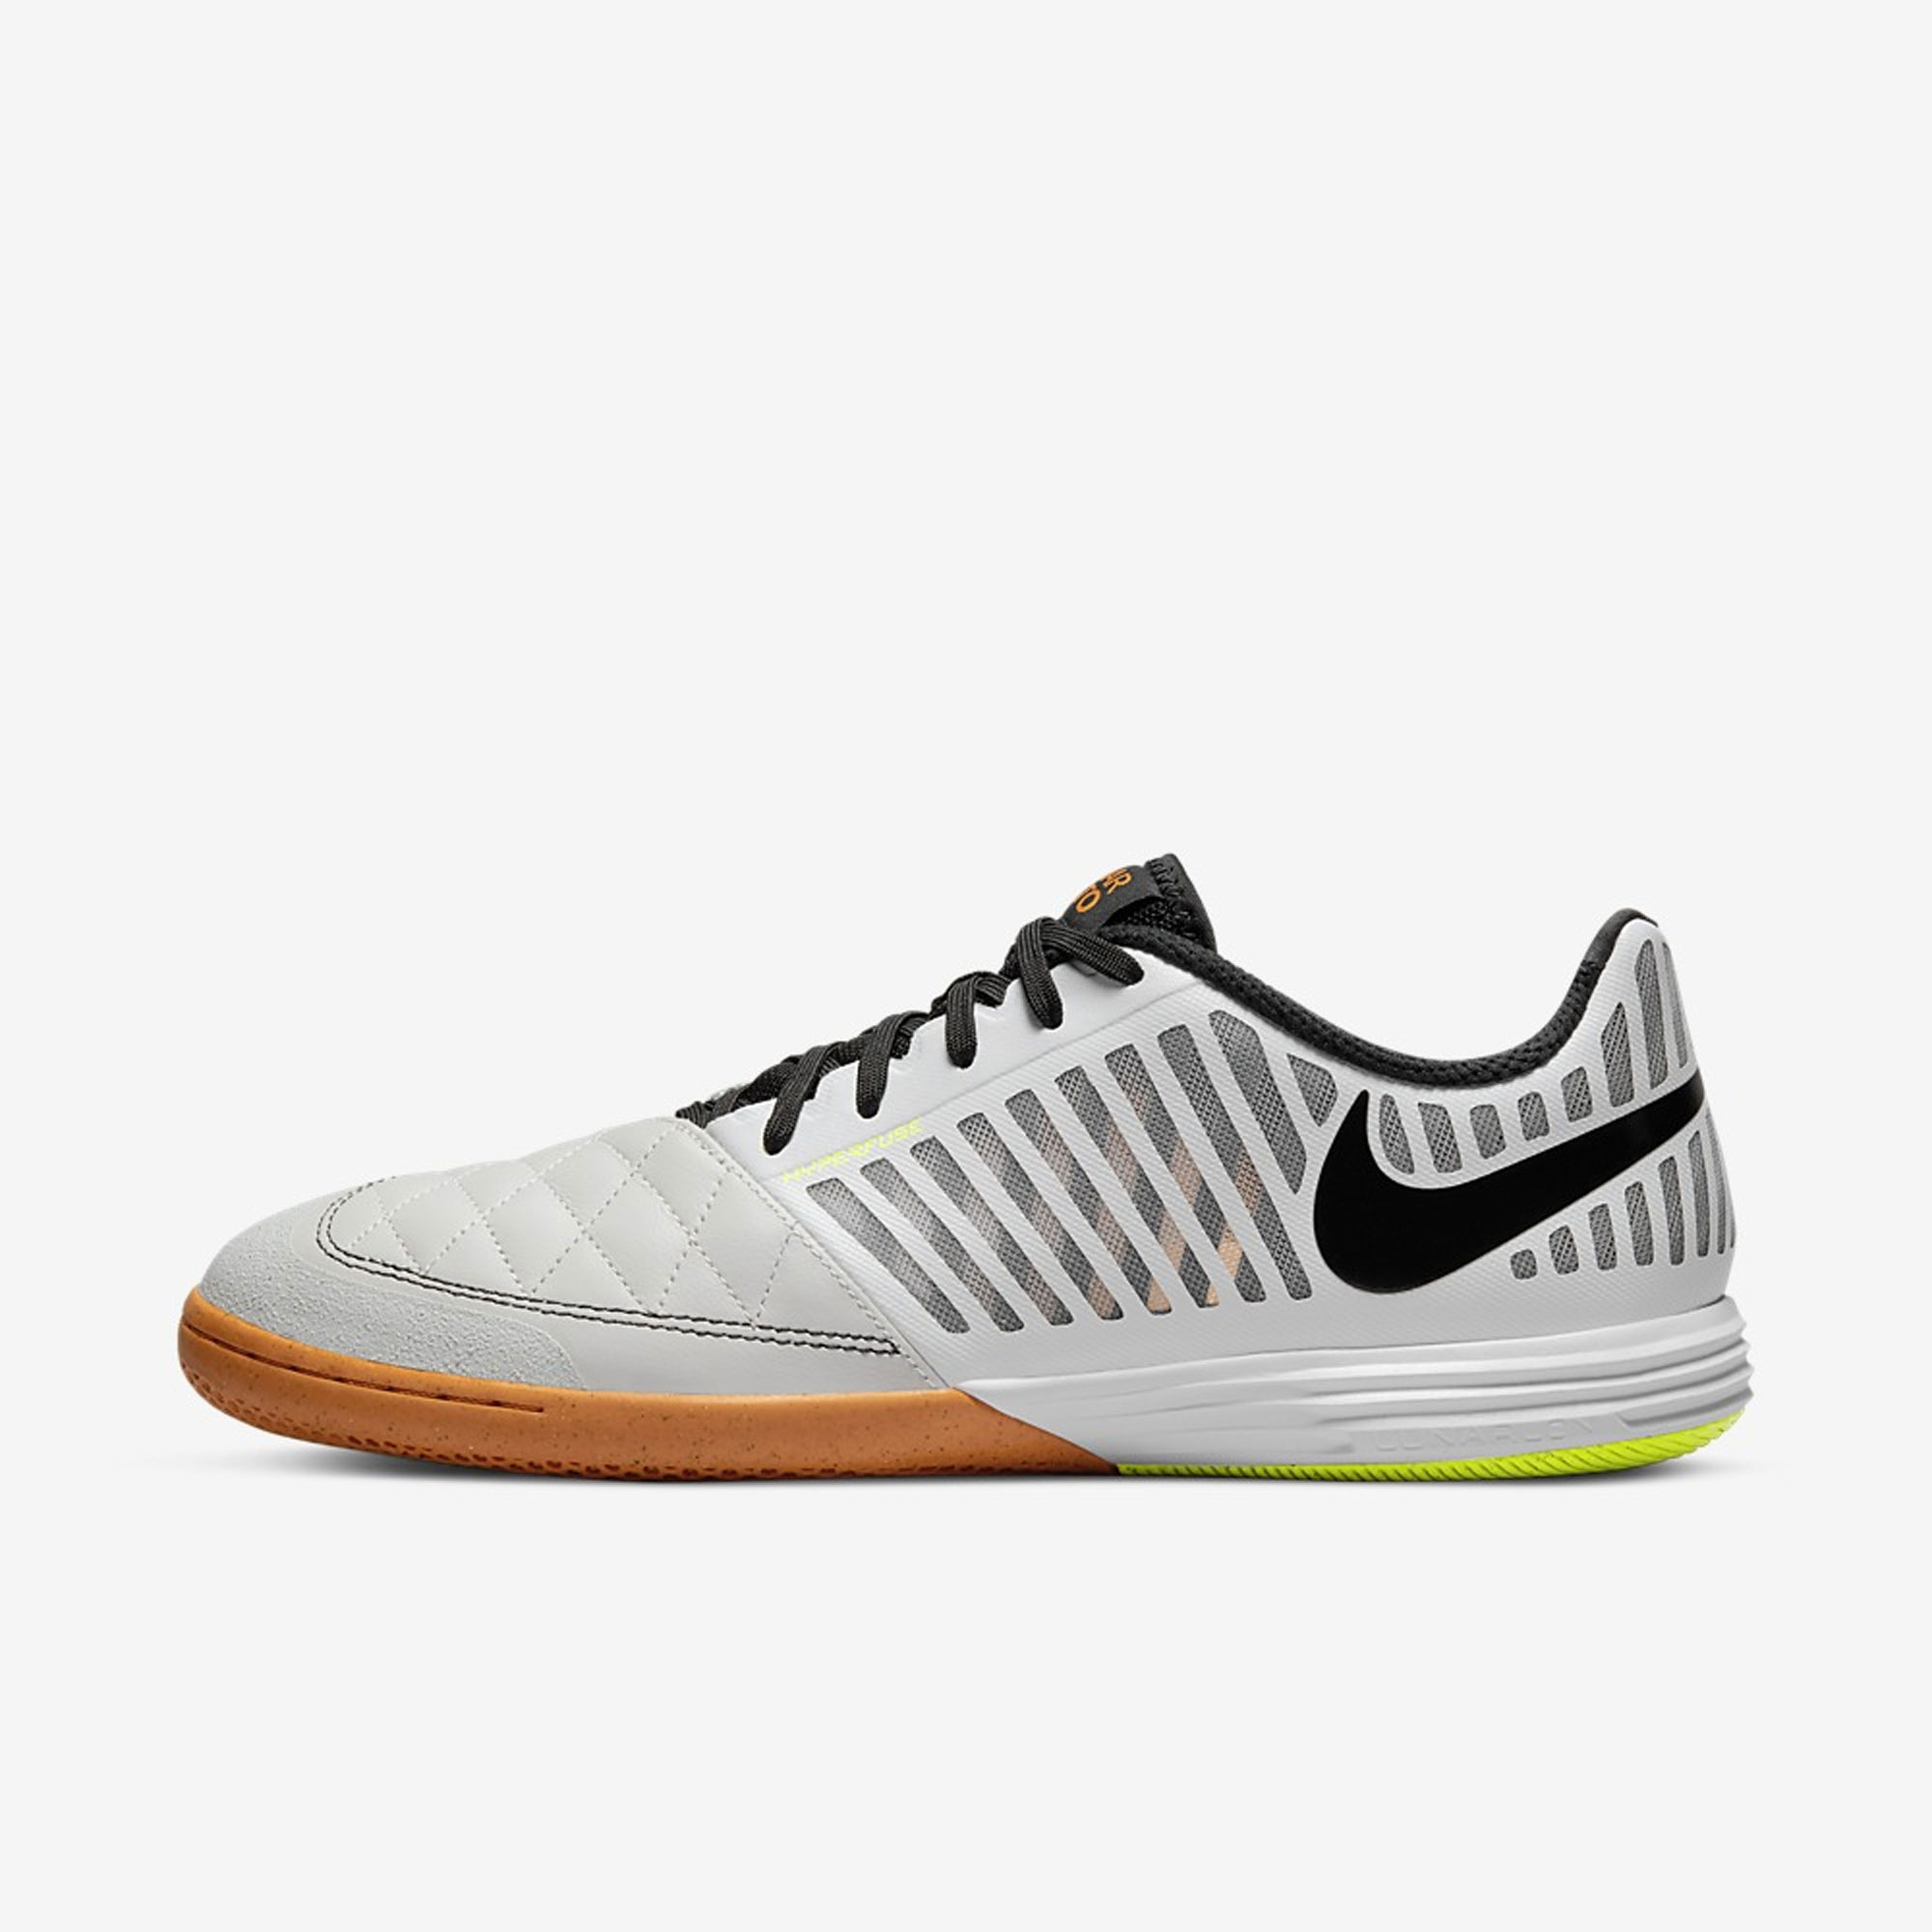 stefanssoccer.com:Nike Lunar Gato II Indoor Soccer Shoes - White Photon Dust / Light Curry / Black